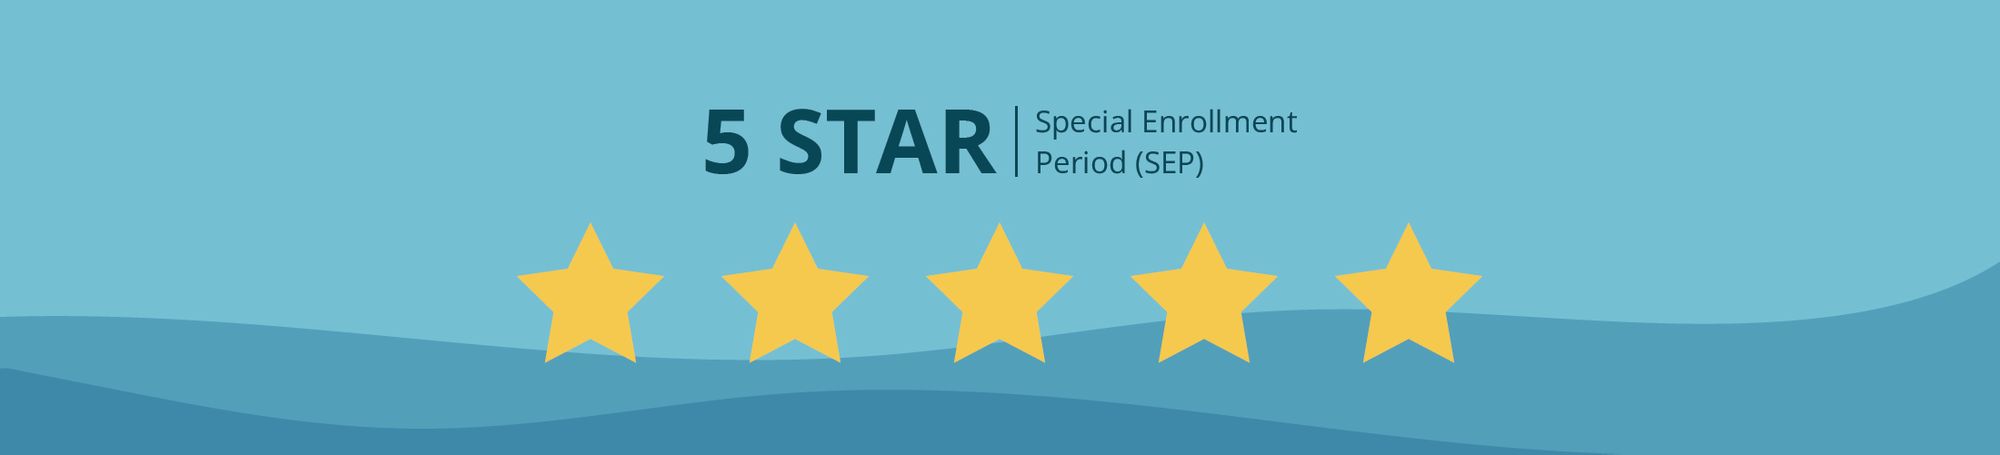 5 Star Special Enrollment Period